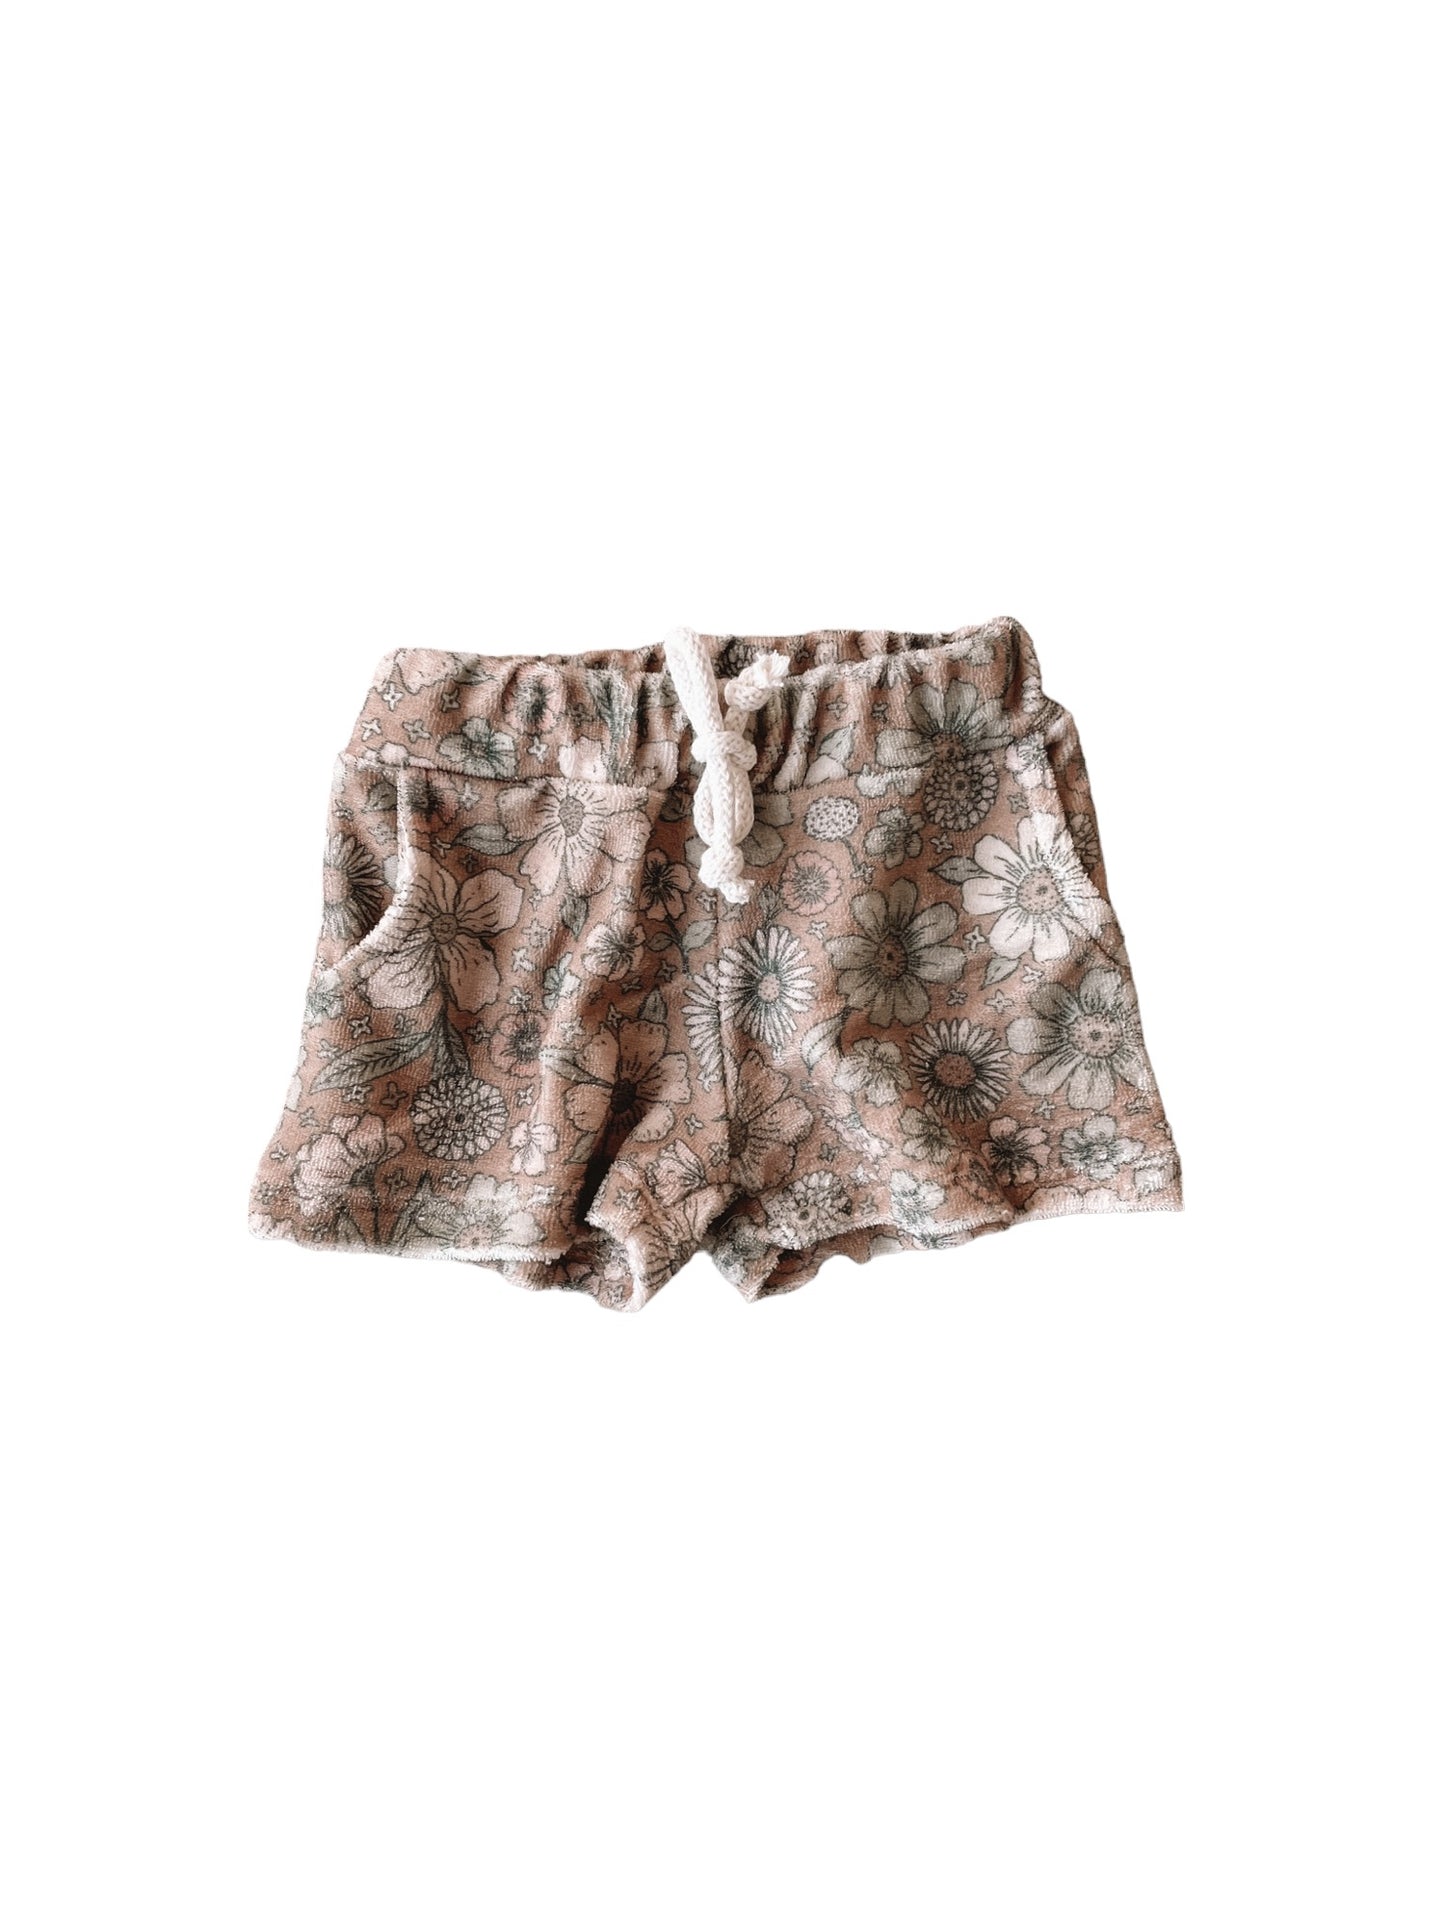 Terry shorts / bold floral caramel